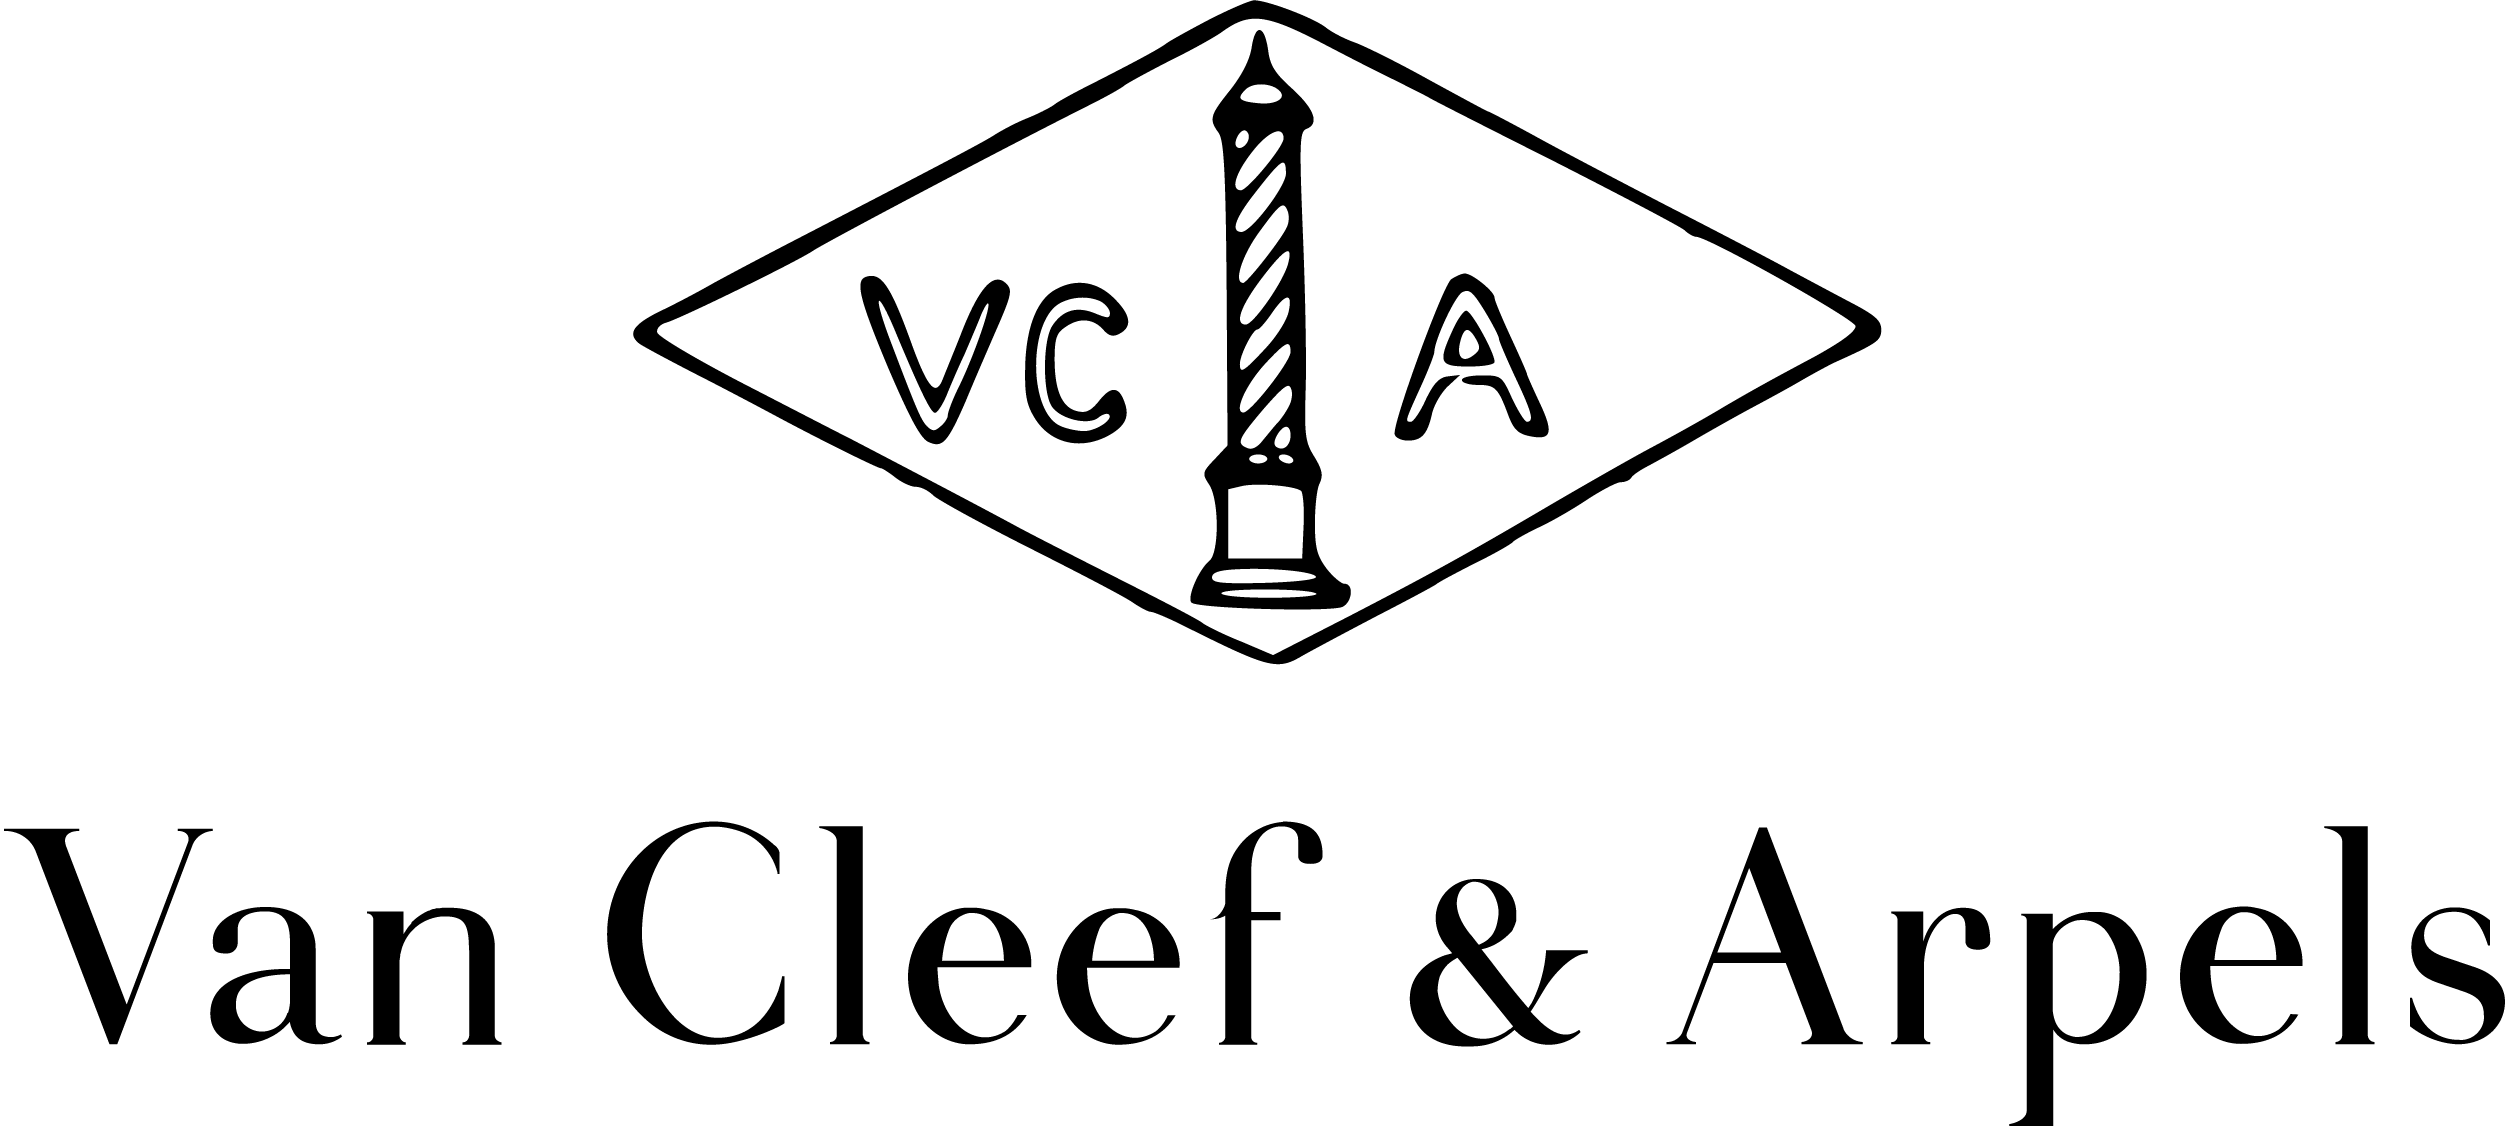 Van-Cleef-Arpels-logo